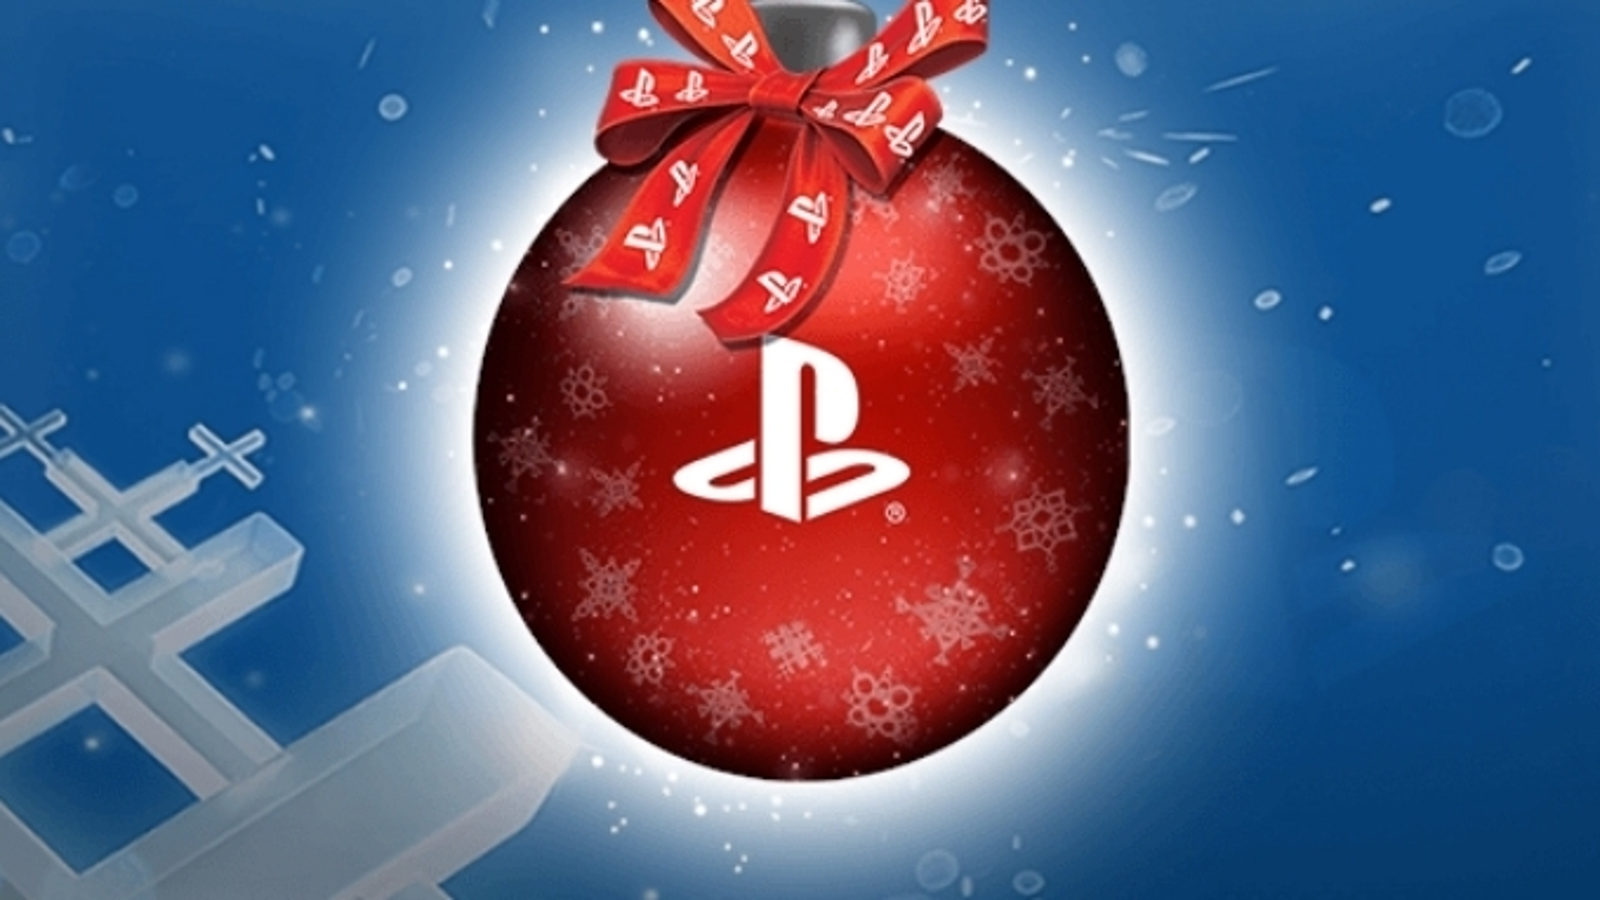 PlayStation 4: Sony envia tema de natal gratuito aos jogadores